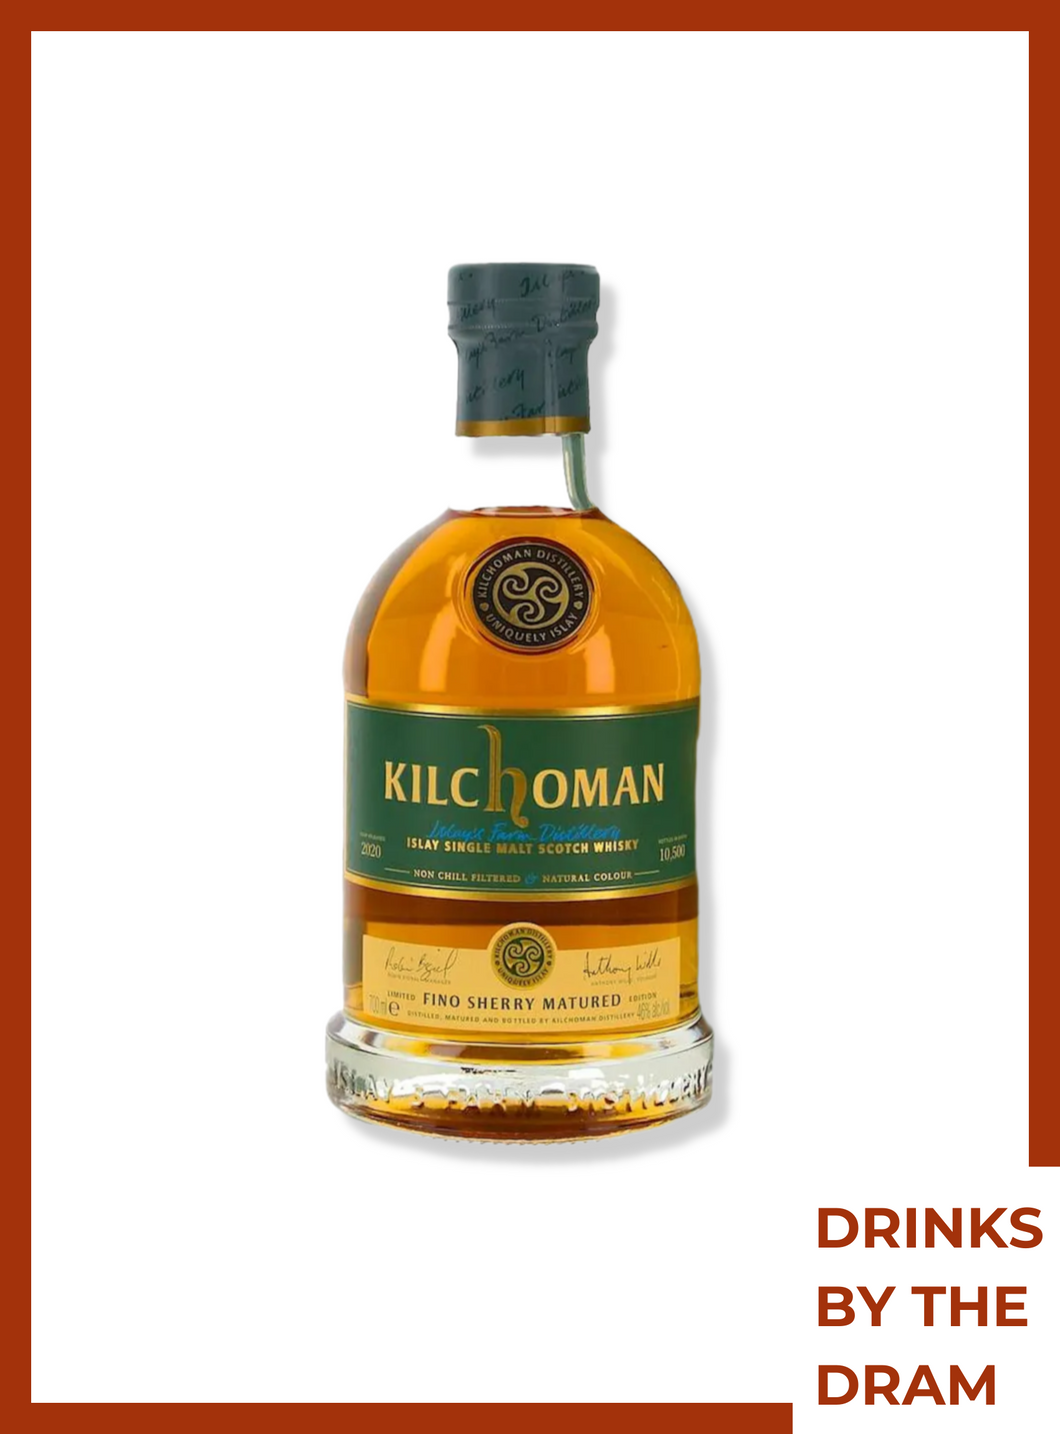 By the Dram (30 ml): Kilchoman Fino Sherry Matured 2020 Edition